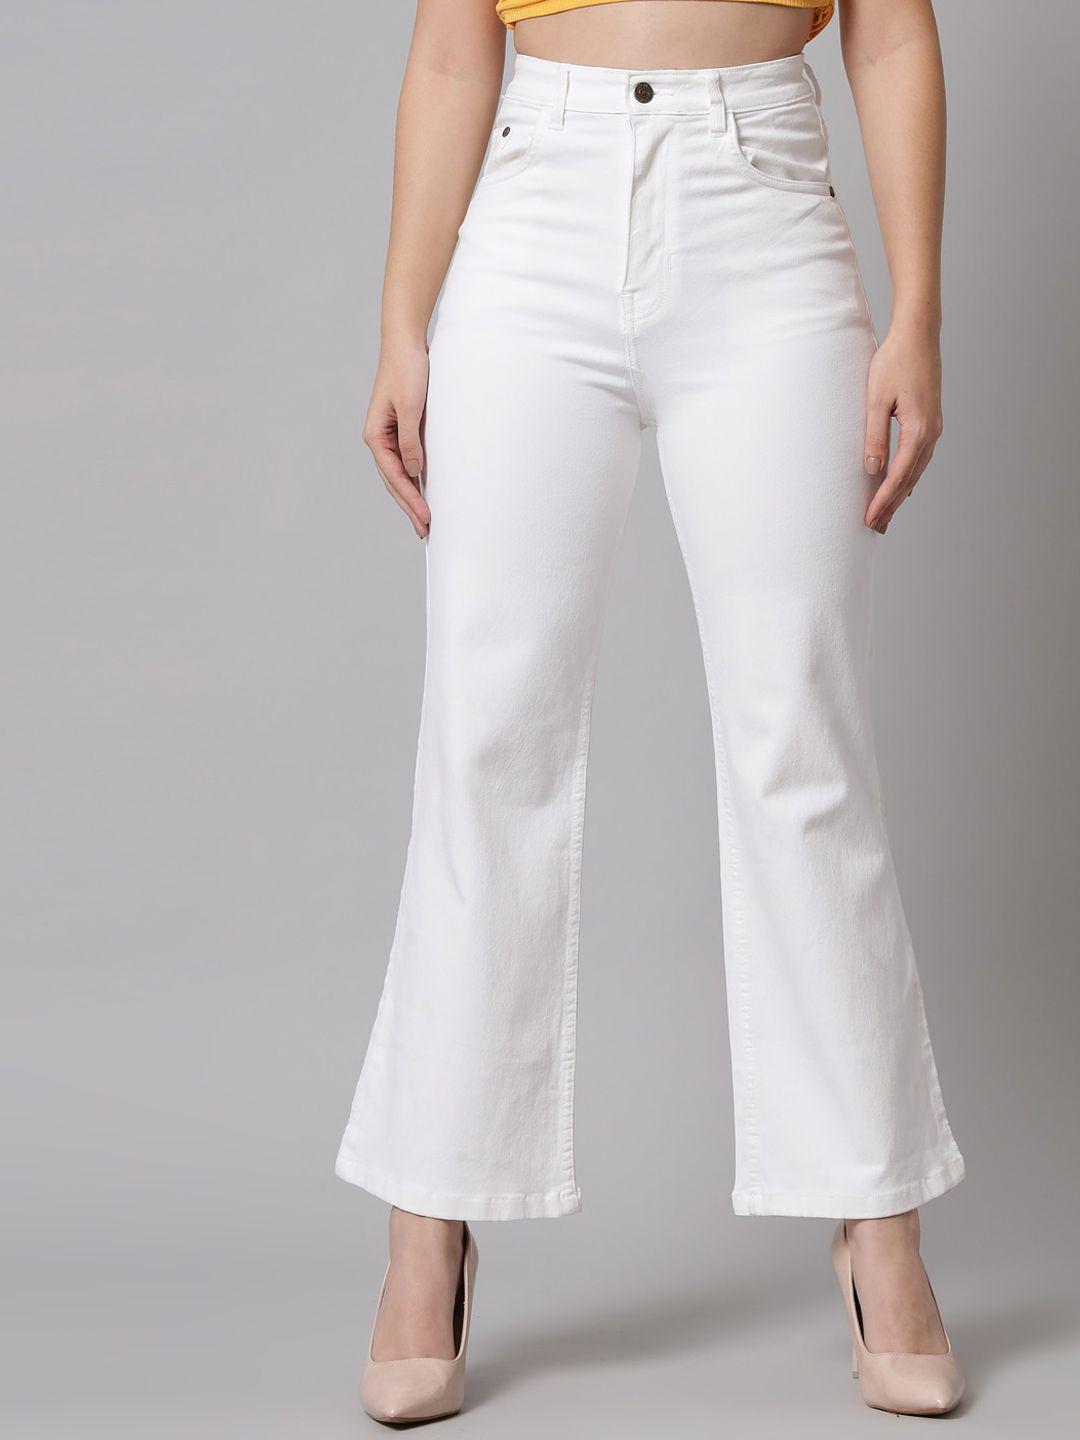 guti-women-bootcut-high-rise-stretchable-cotton-jeans